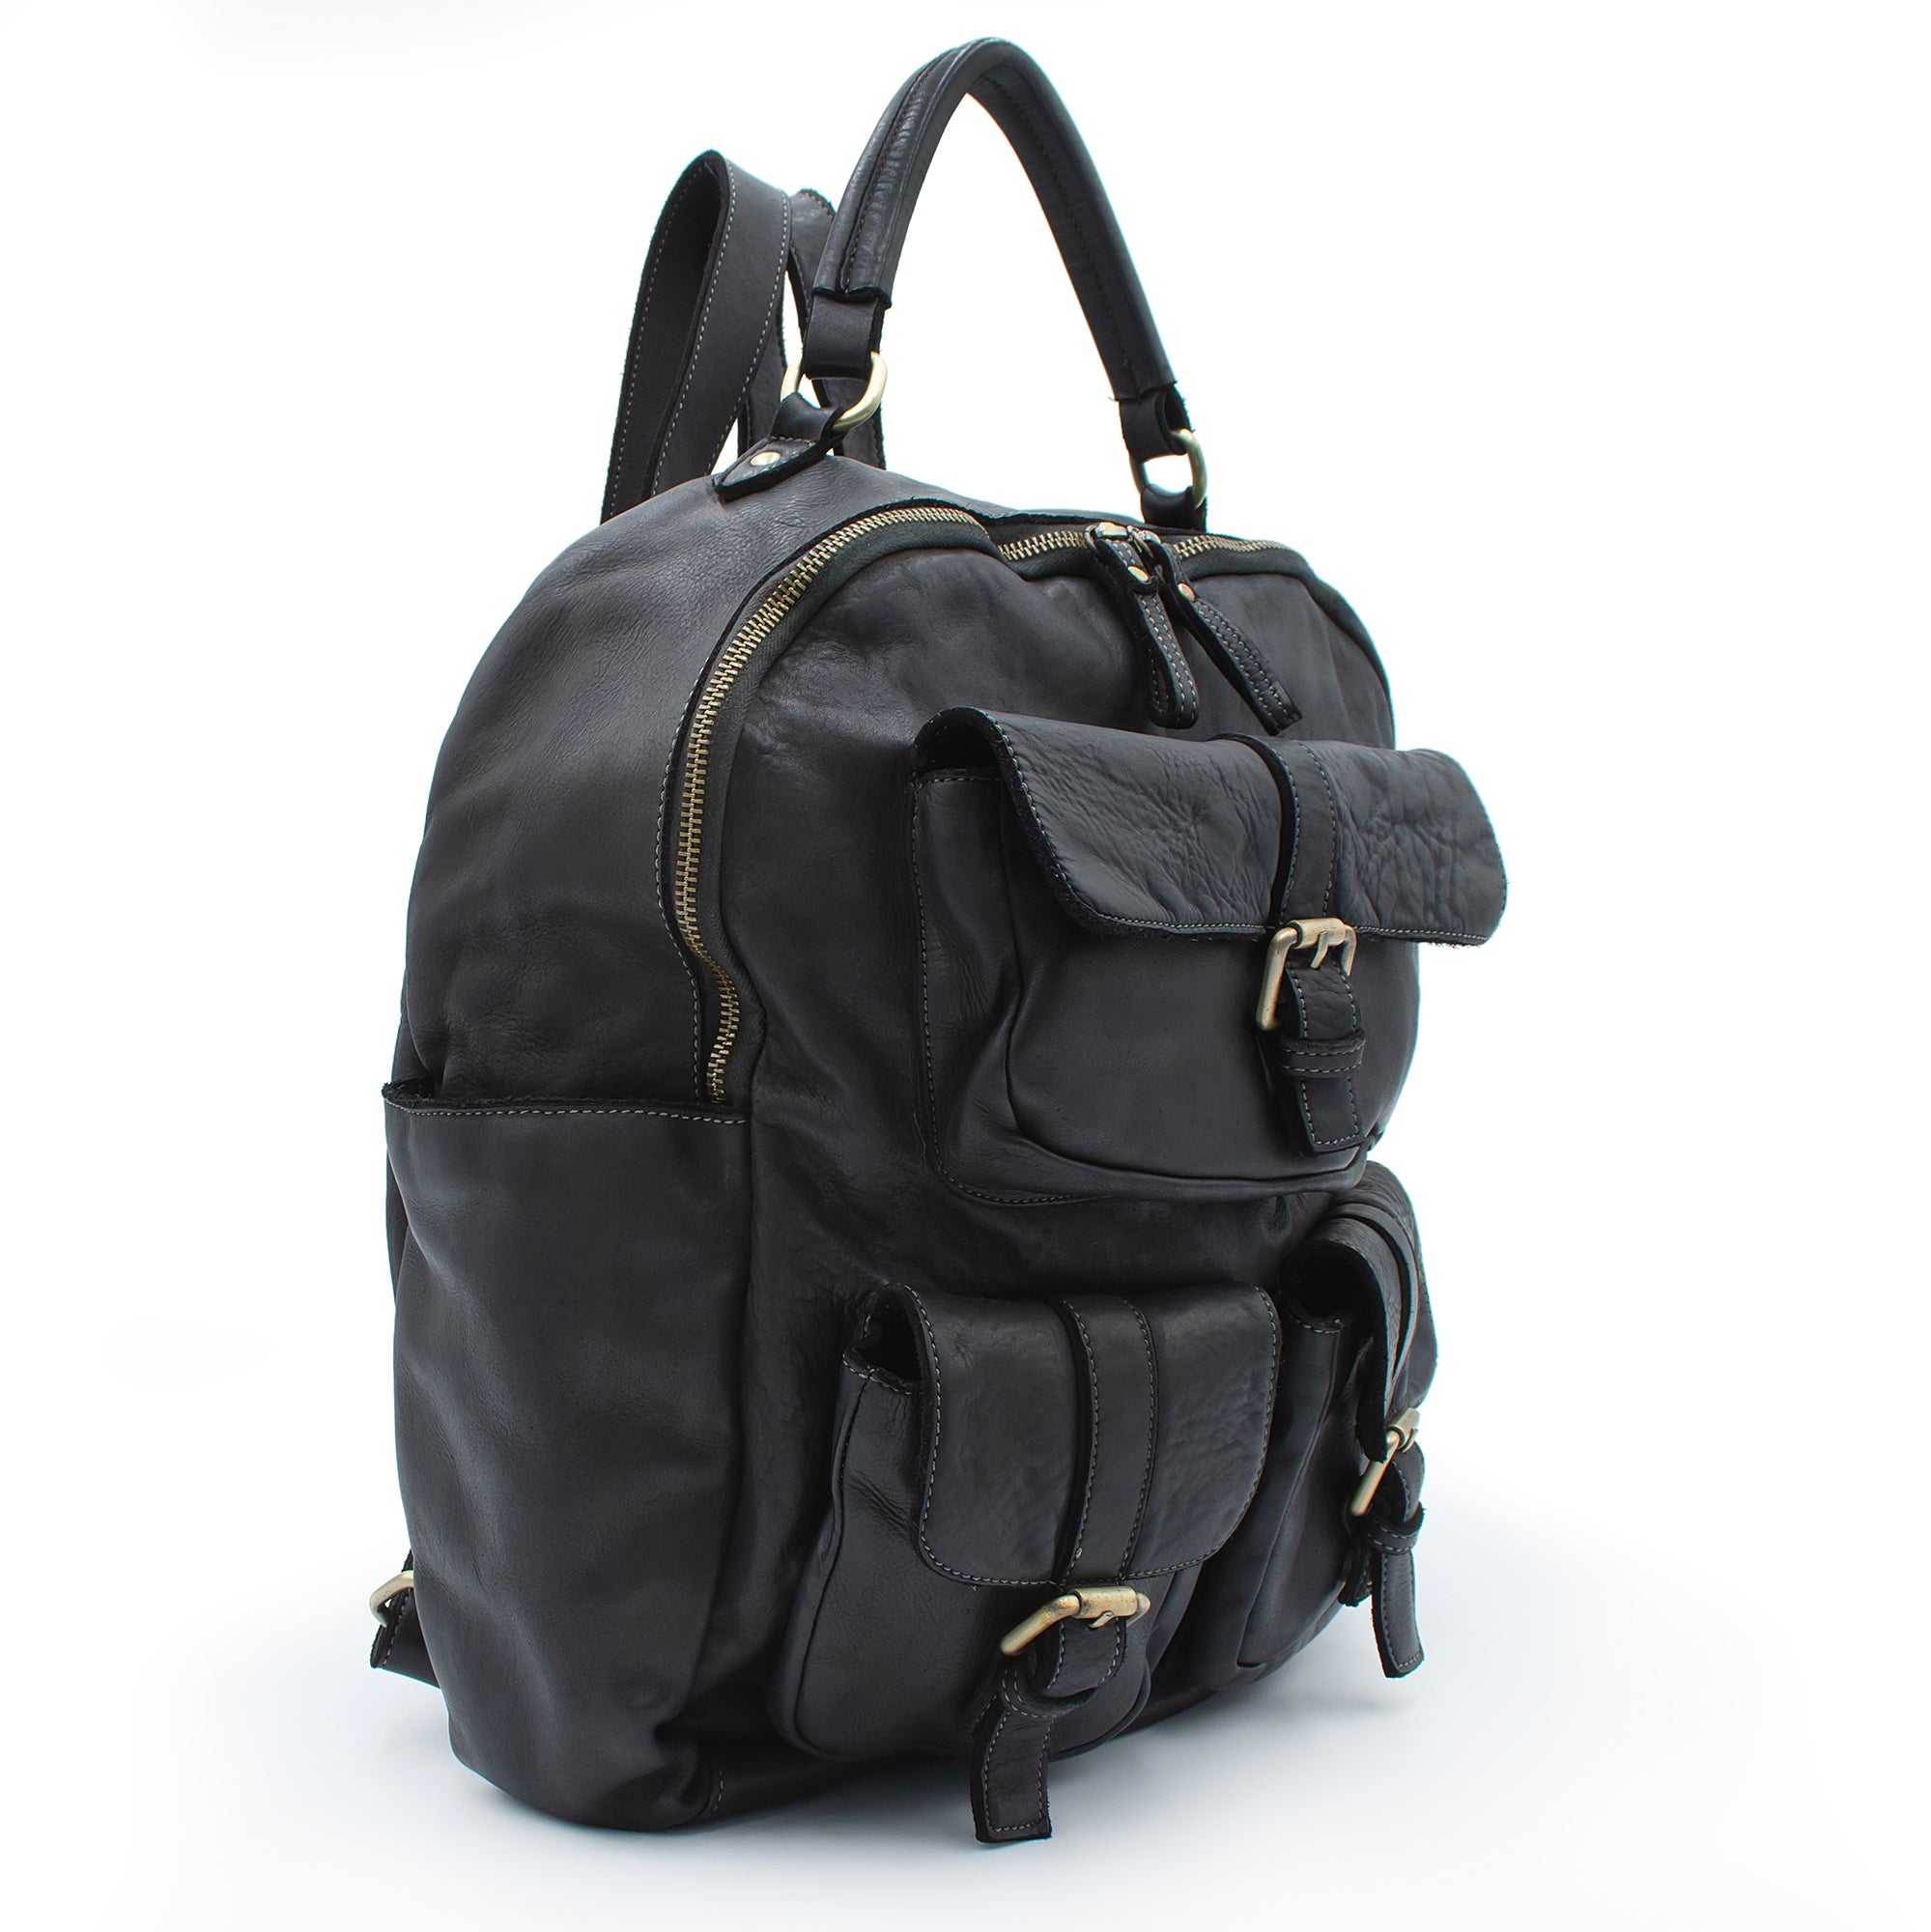 Viva Backpack in Black